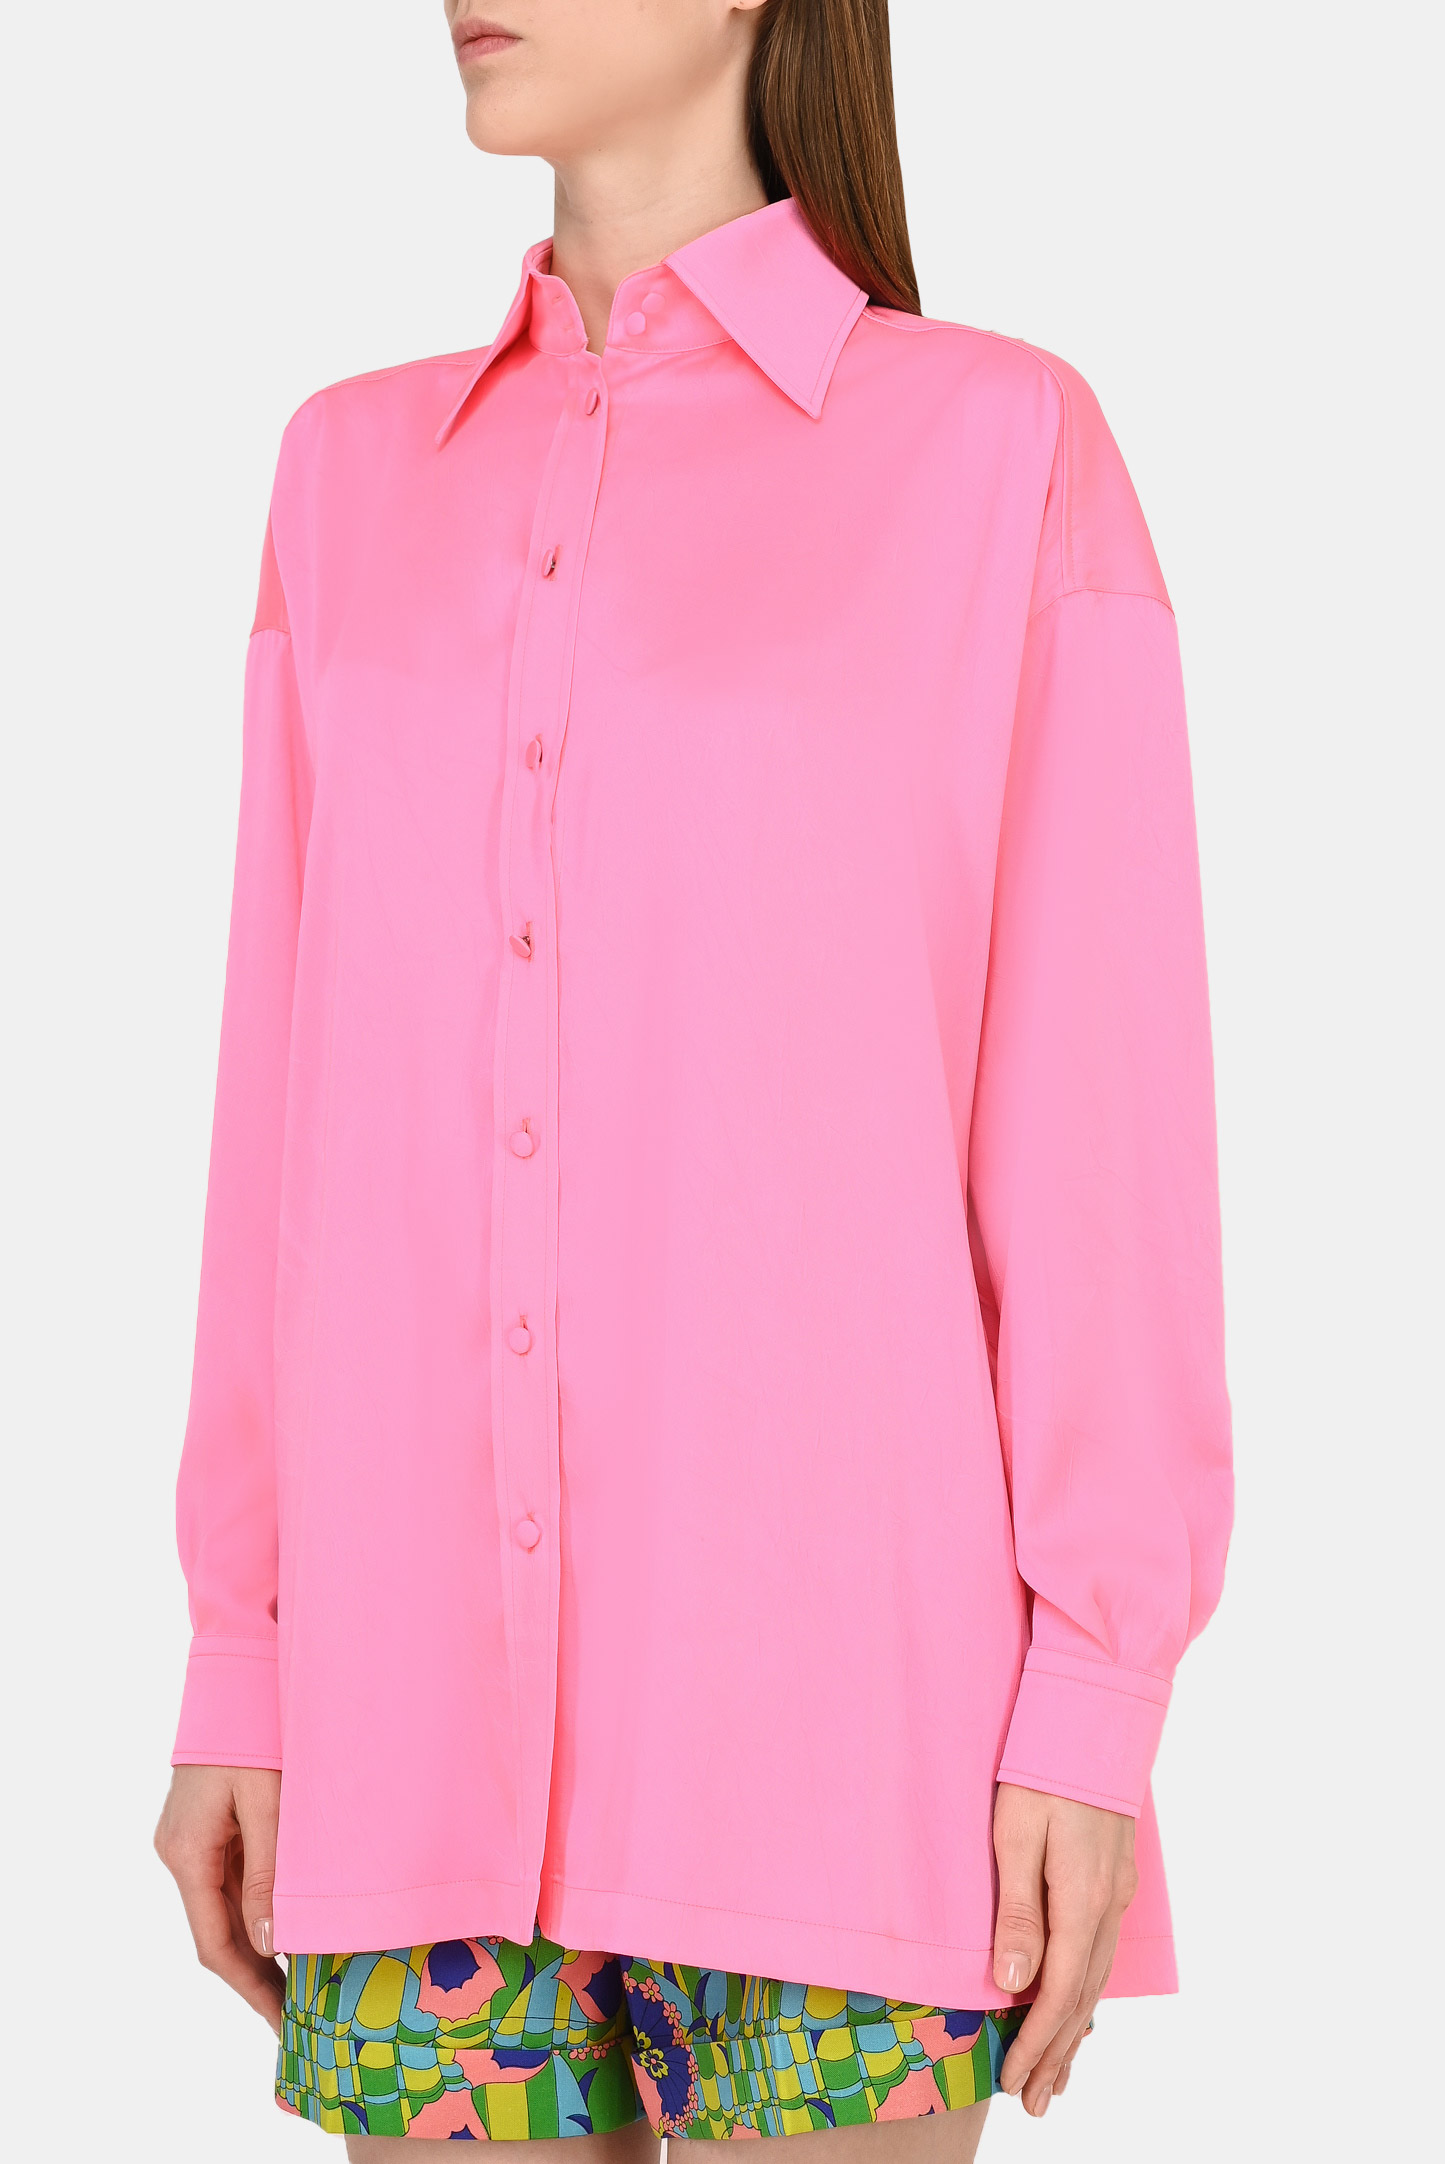 Рубашка DOLCE & GABBANA F5P21T FUSQ7, цвет: Розовый, Женский